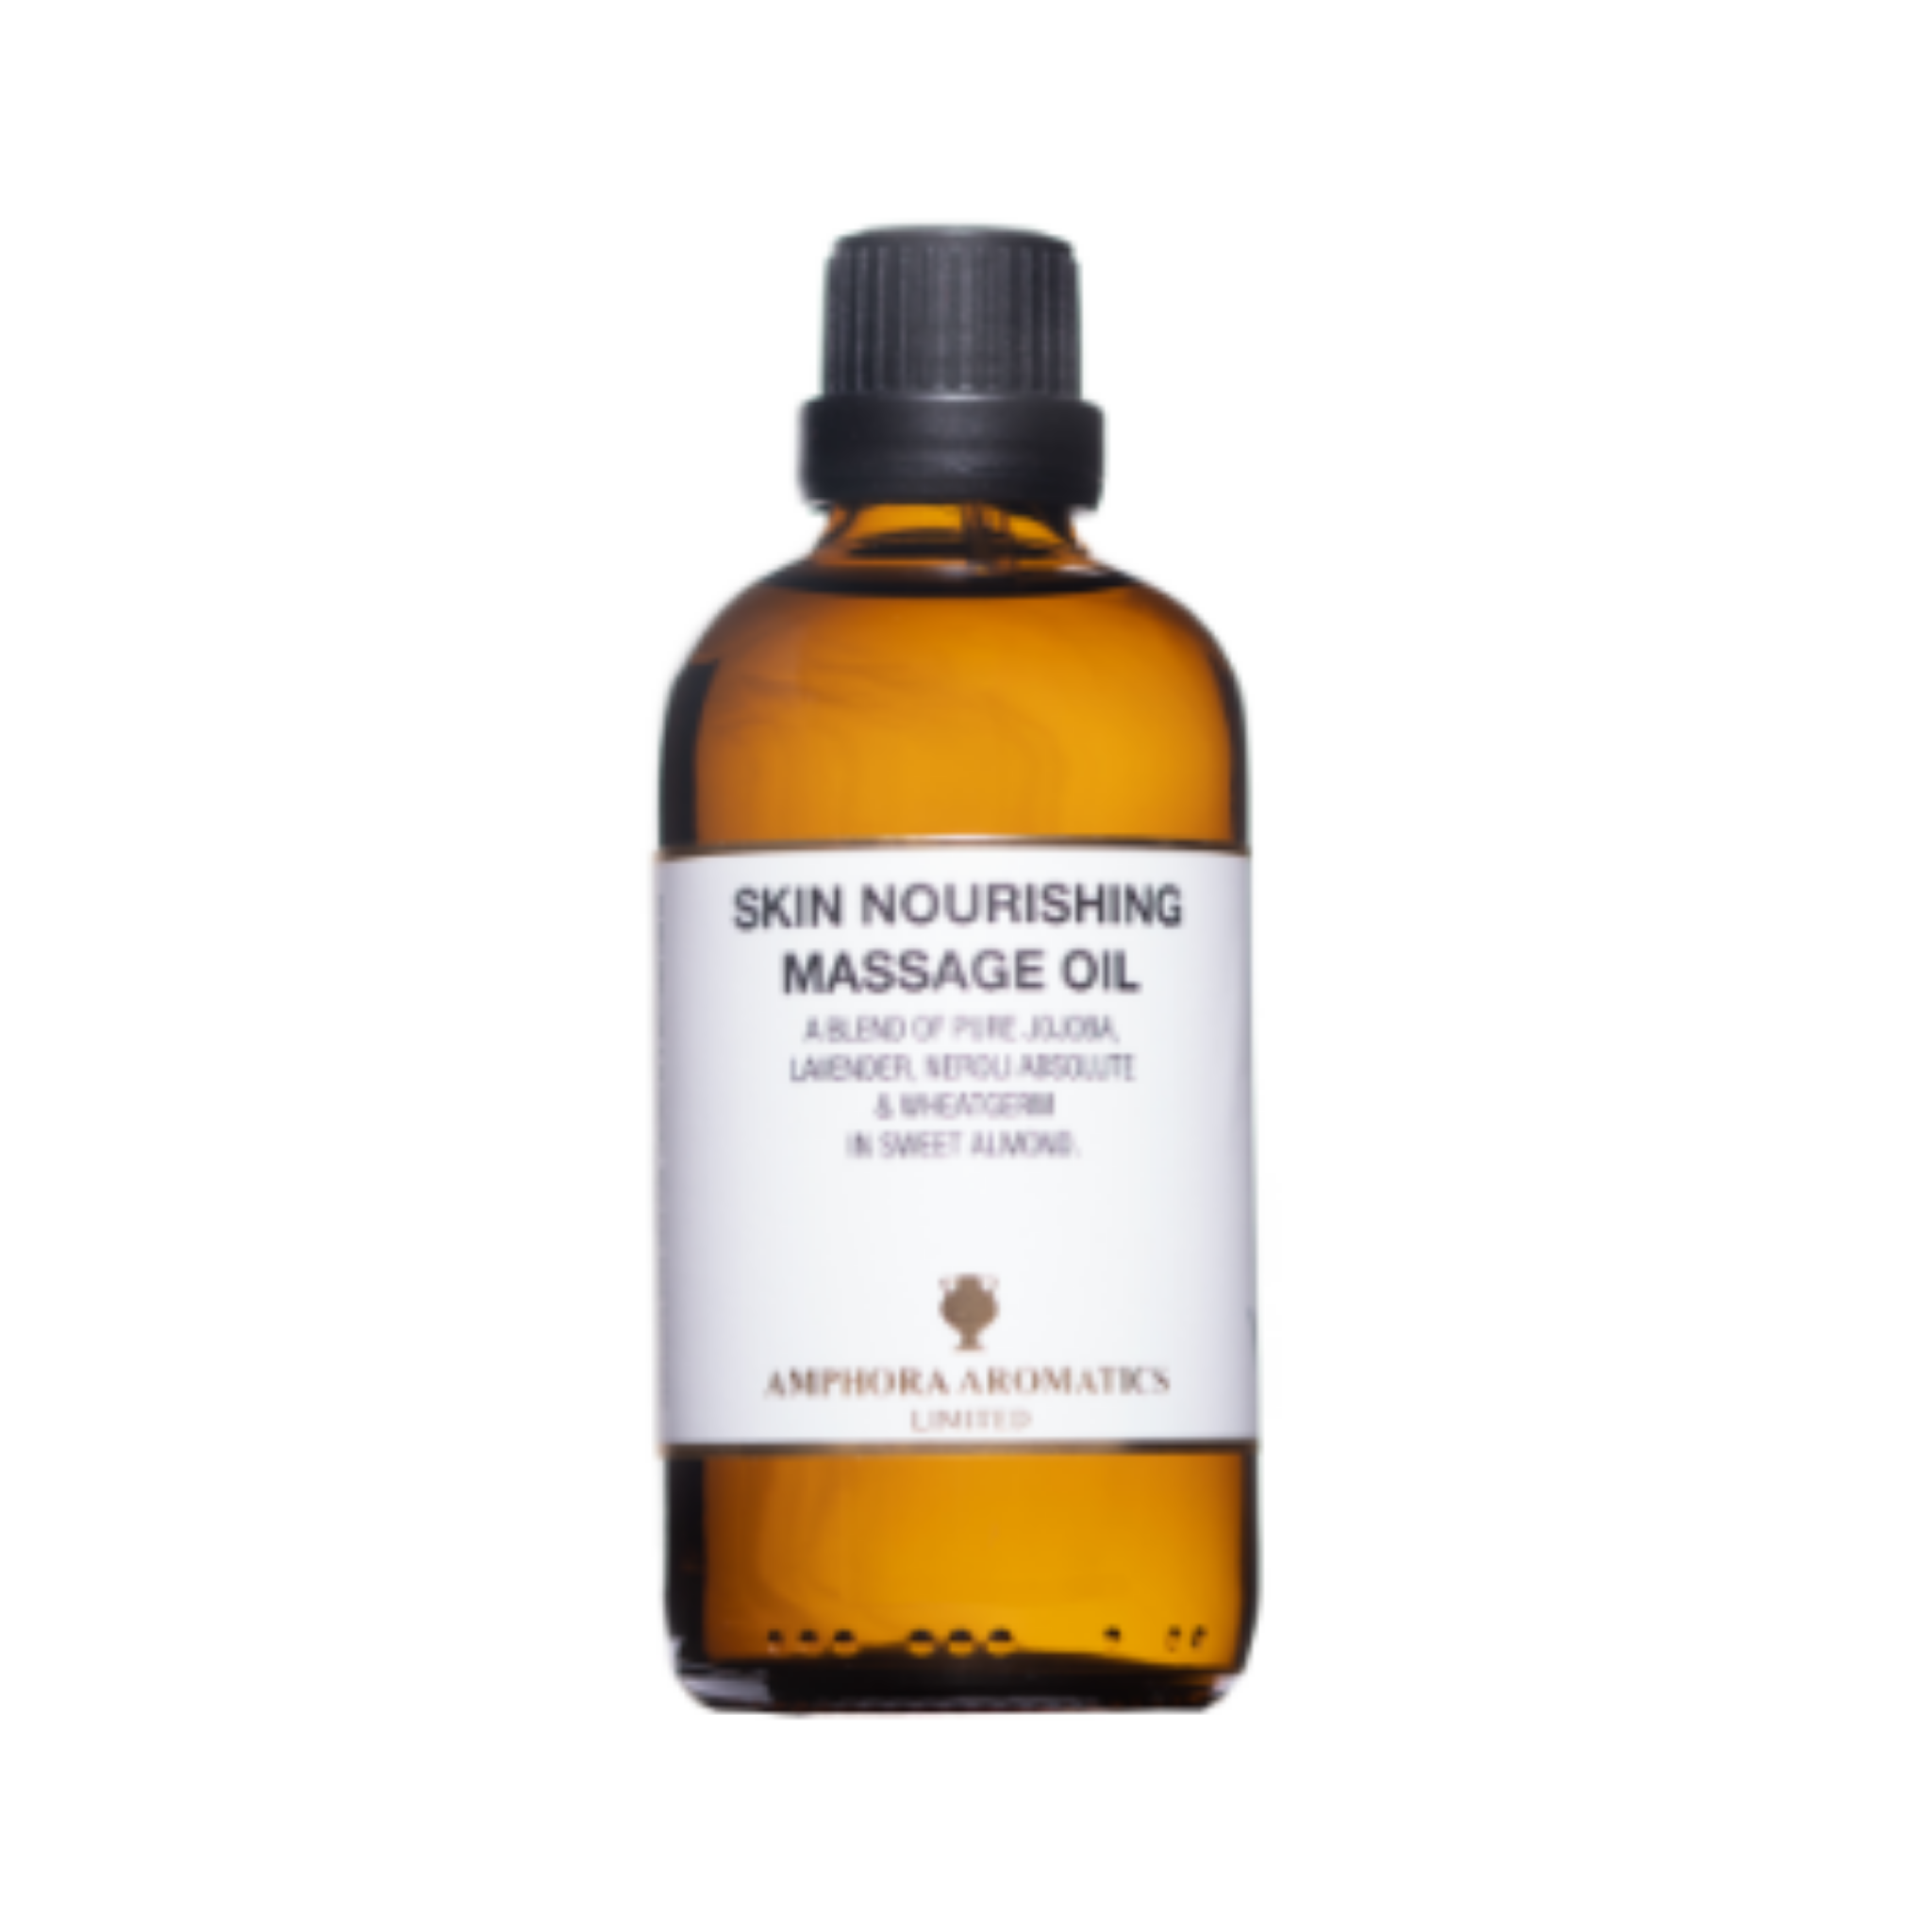 Skin Nourishing Massage Oil by Amphora Aromatics